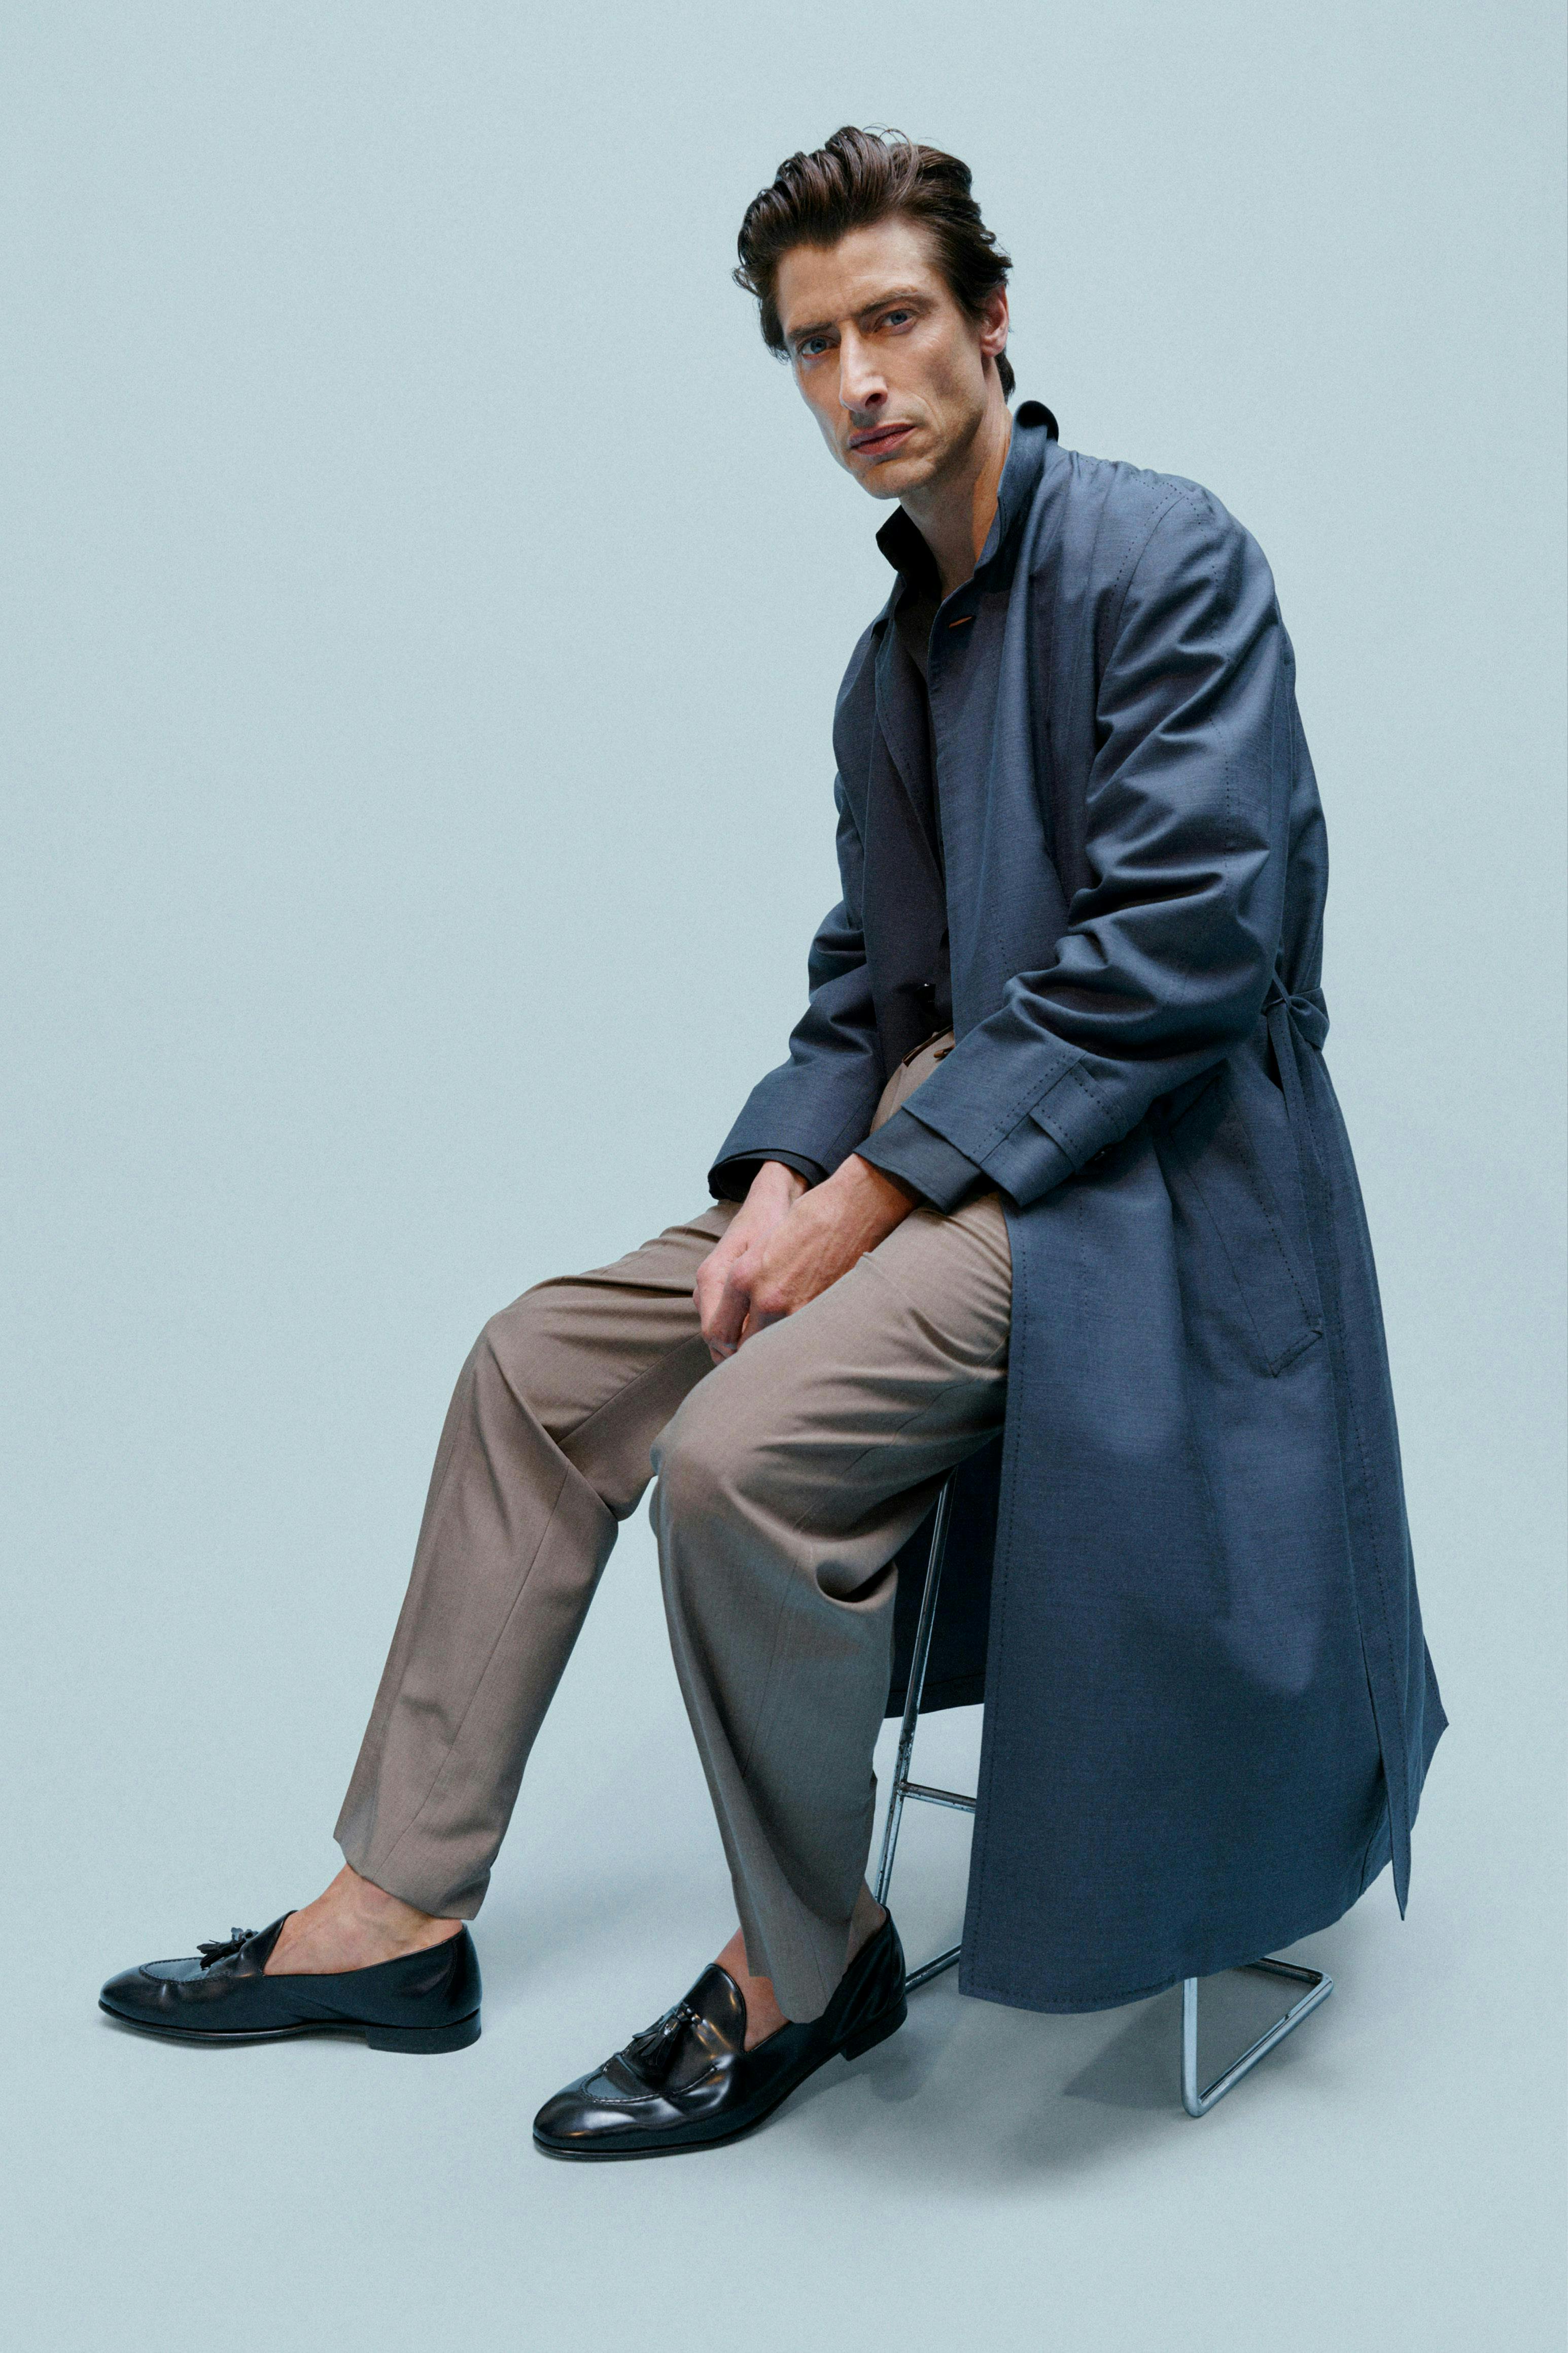 clothing coat shoe adult male man person overcoat blazer sitting